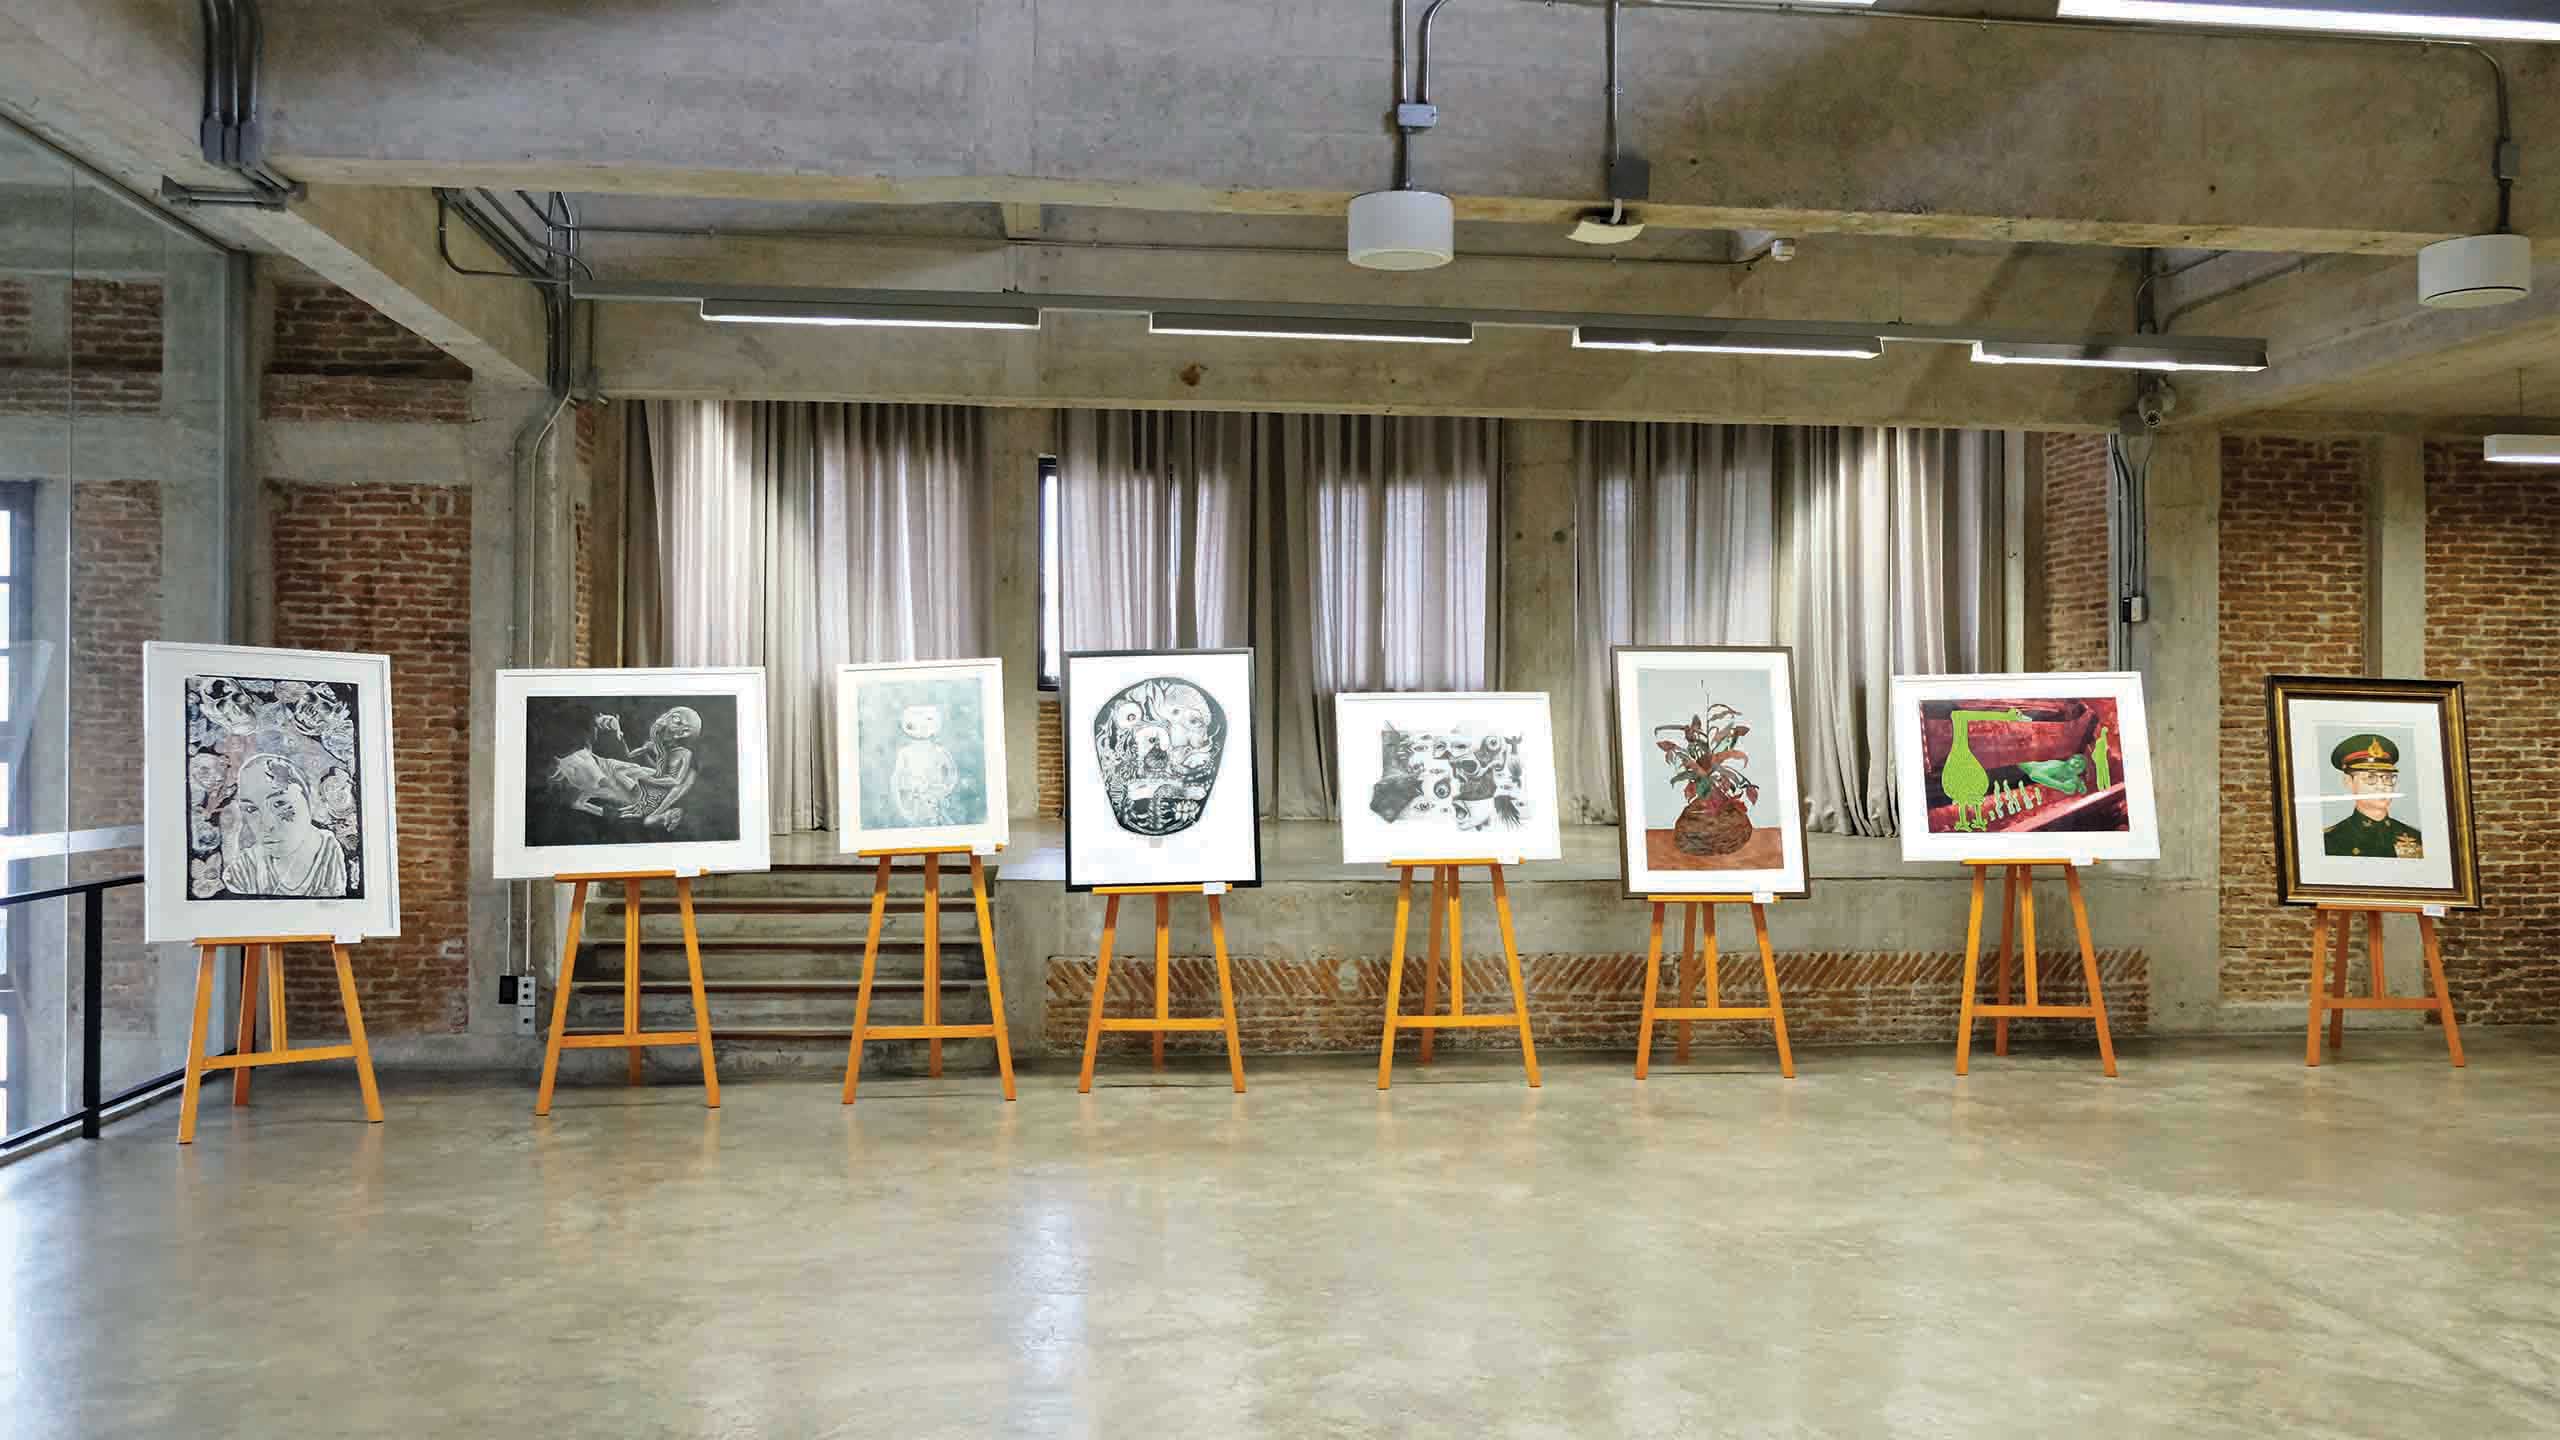 LOOKING 7 By Printmaking of Faculty of Fine Art Bunditpatanasilpa Institute (คณาจารย์และนักศึกษาสาขาวิชาภาพพิมพ์ คณะศิลปวิจิตร สถาบันบัณฑิตพัฒนศิลป์)